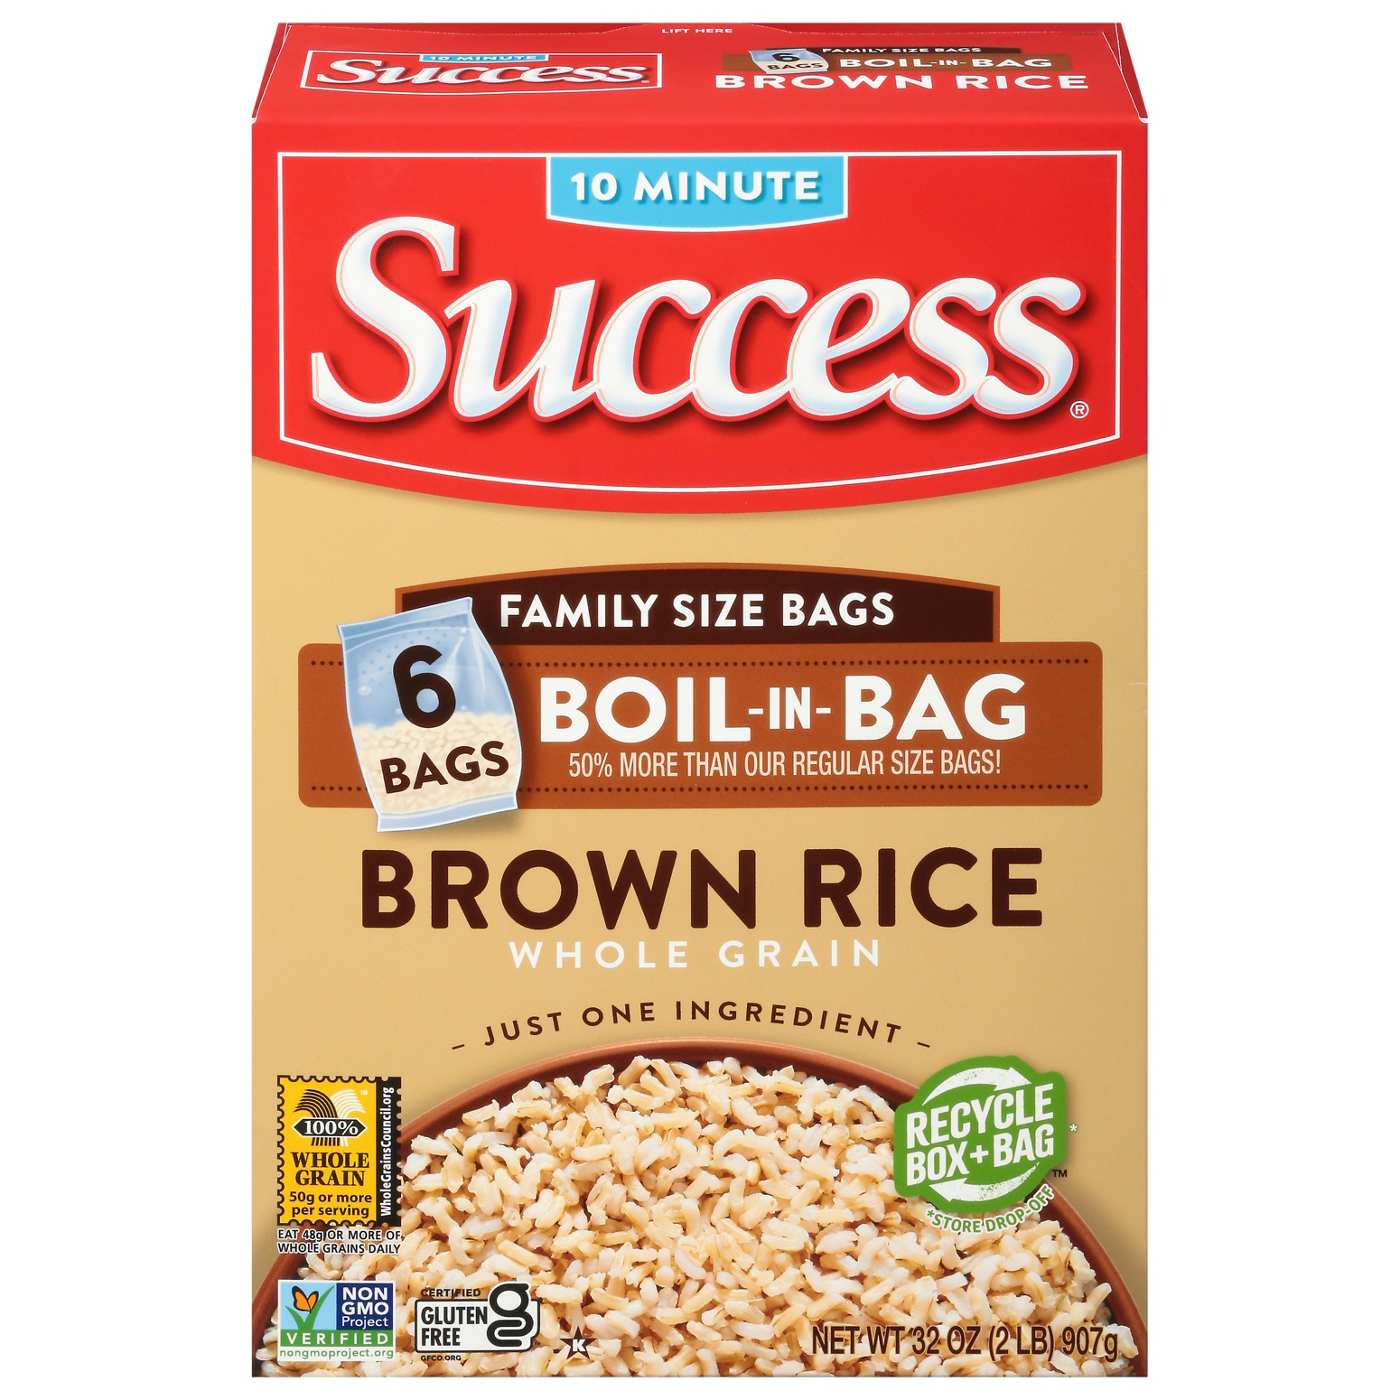 Success Boil-in-Bag Whole Grain Brown Rice; image 1 of 7